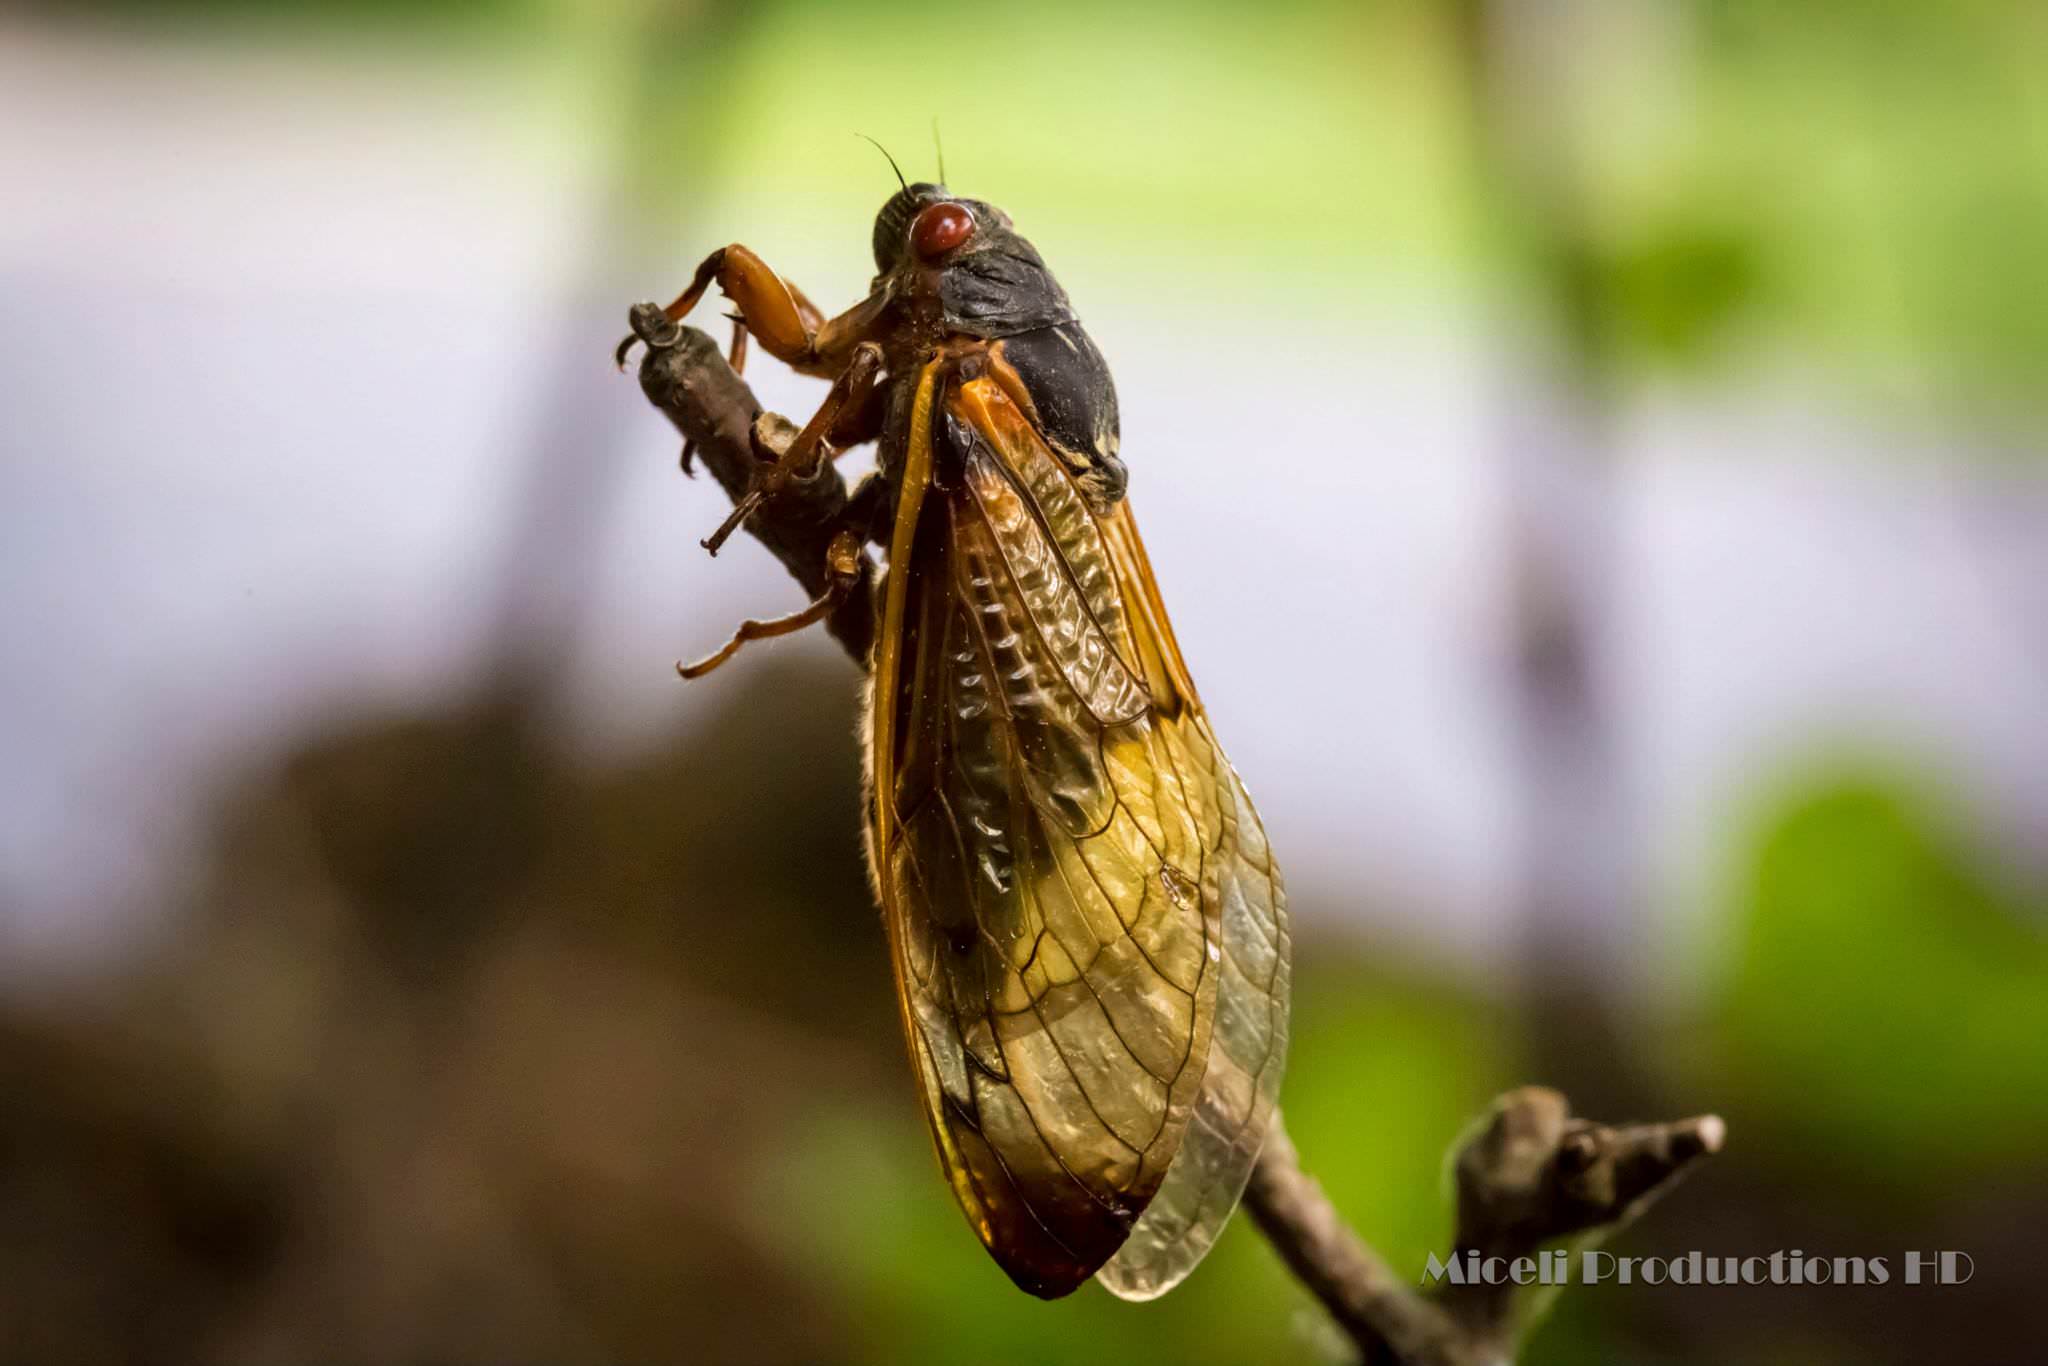 2013 Magicicada periodical cicada, photography by Miceli Productions